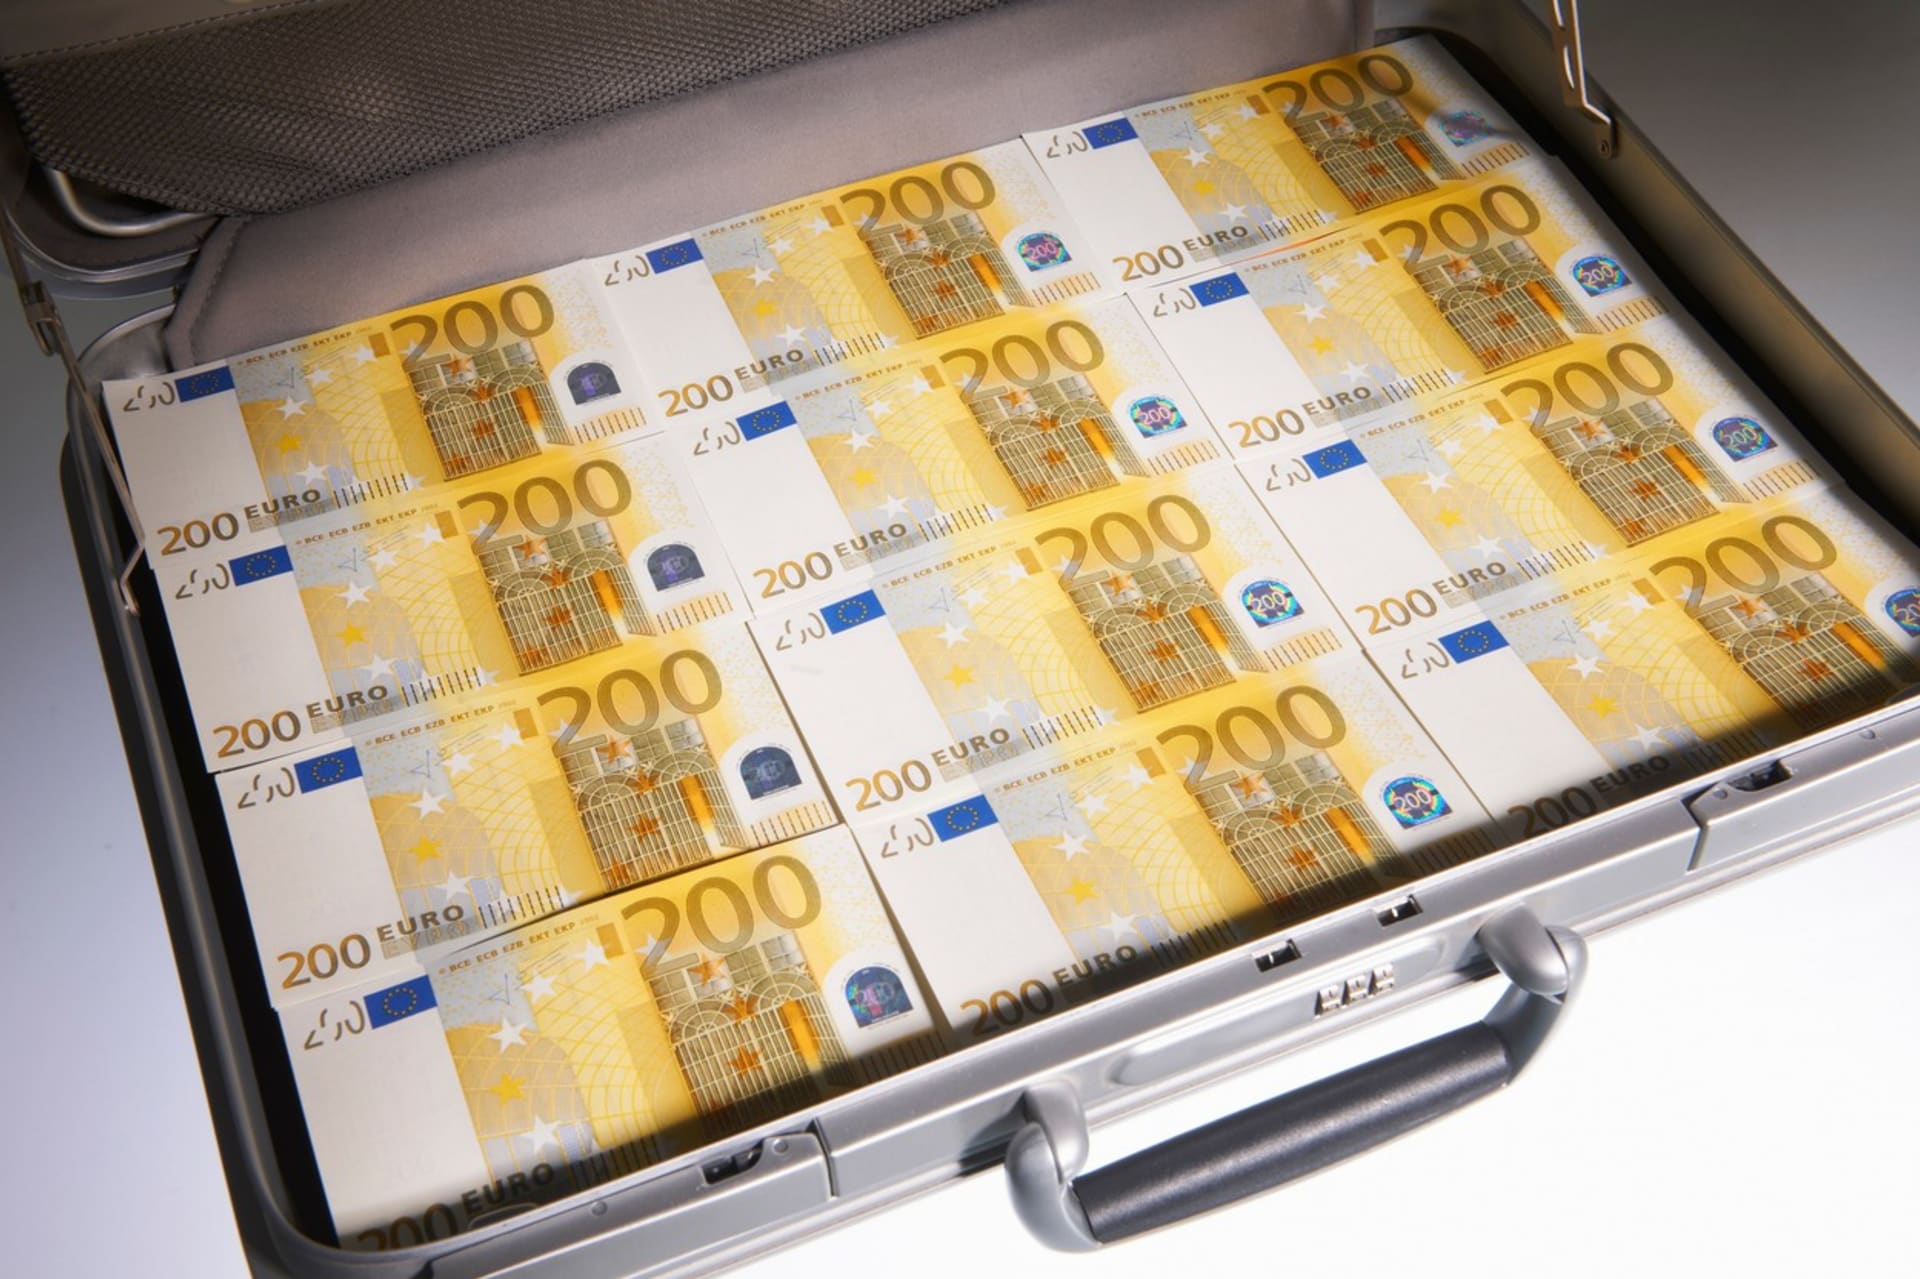 Kufřík s eury